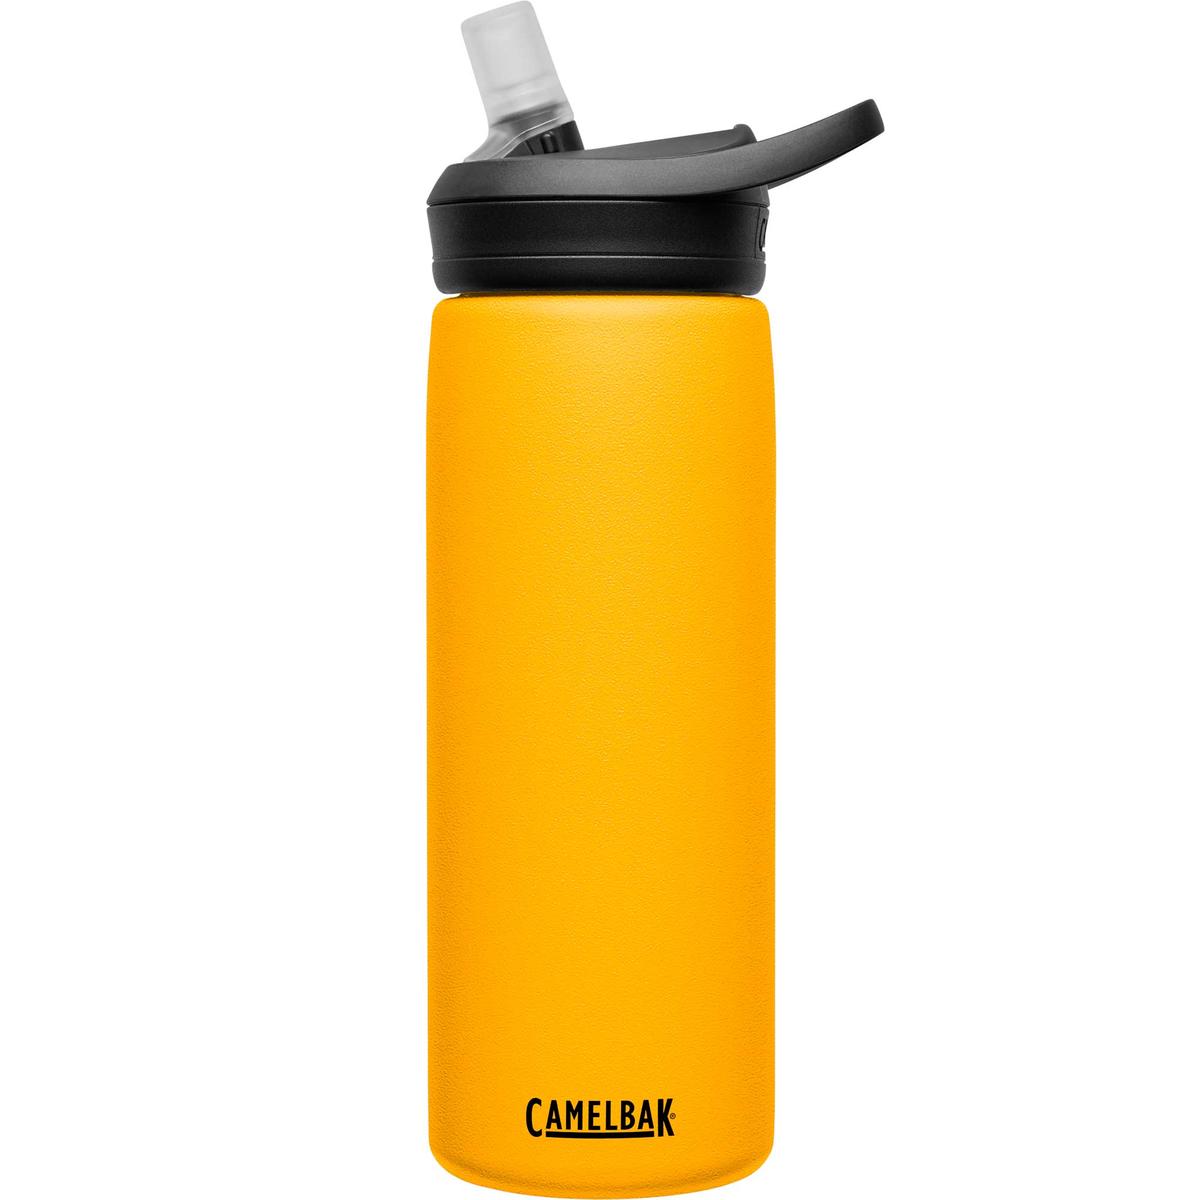 Camelbak 32oz Eddy+ Vacuum Insulated Stainless Steel Water Bottle